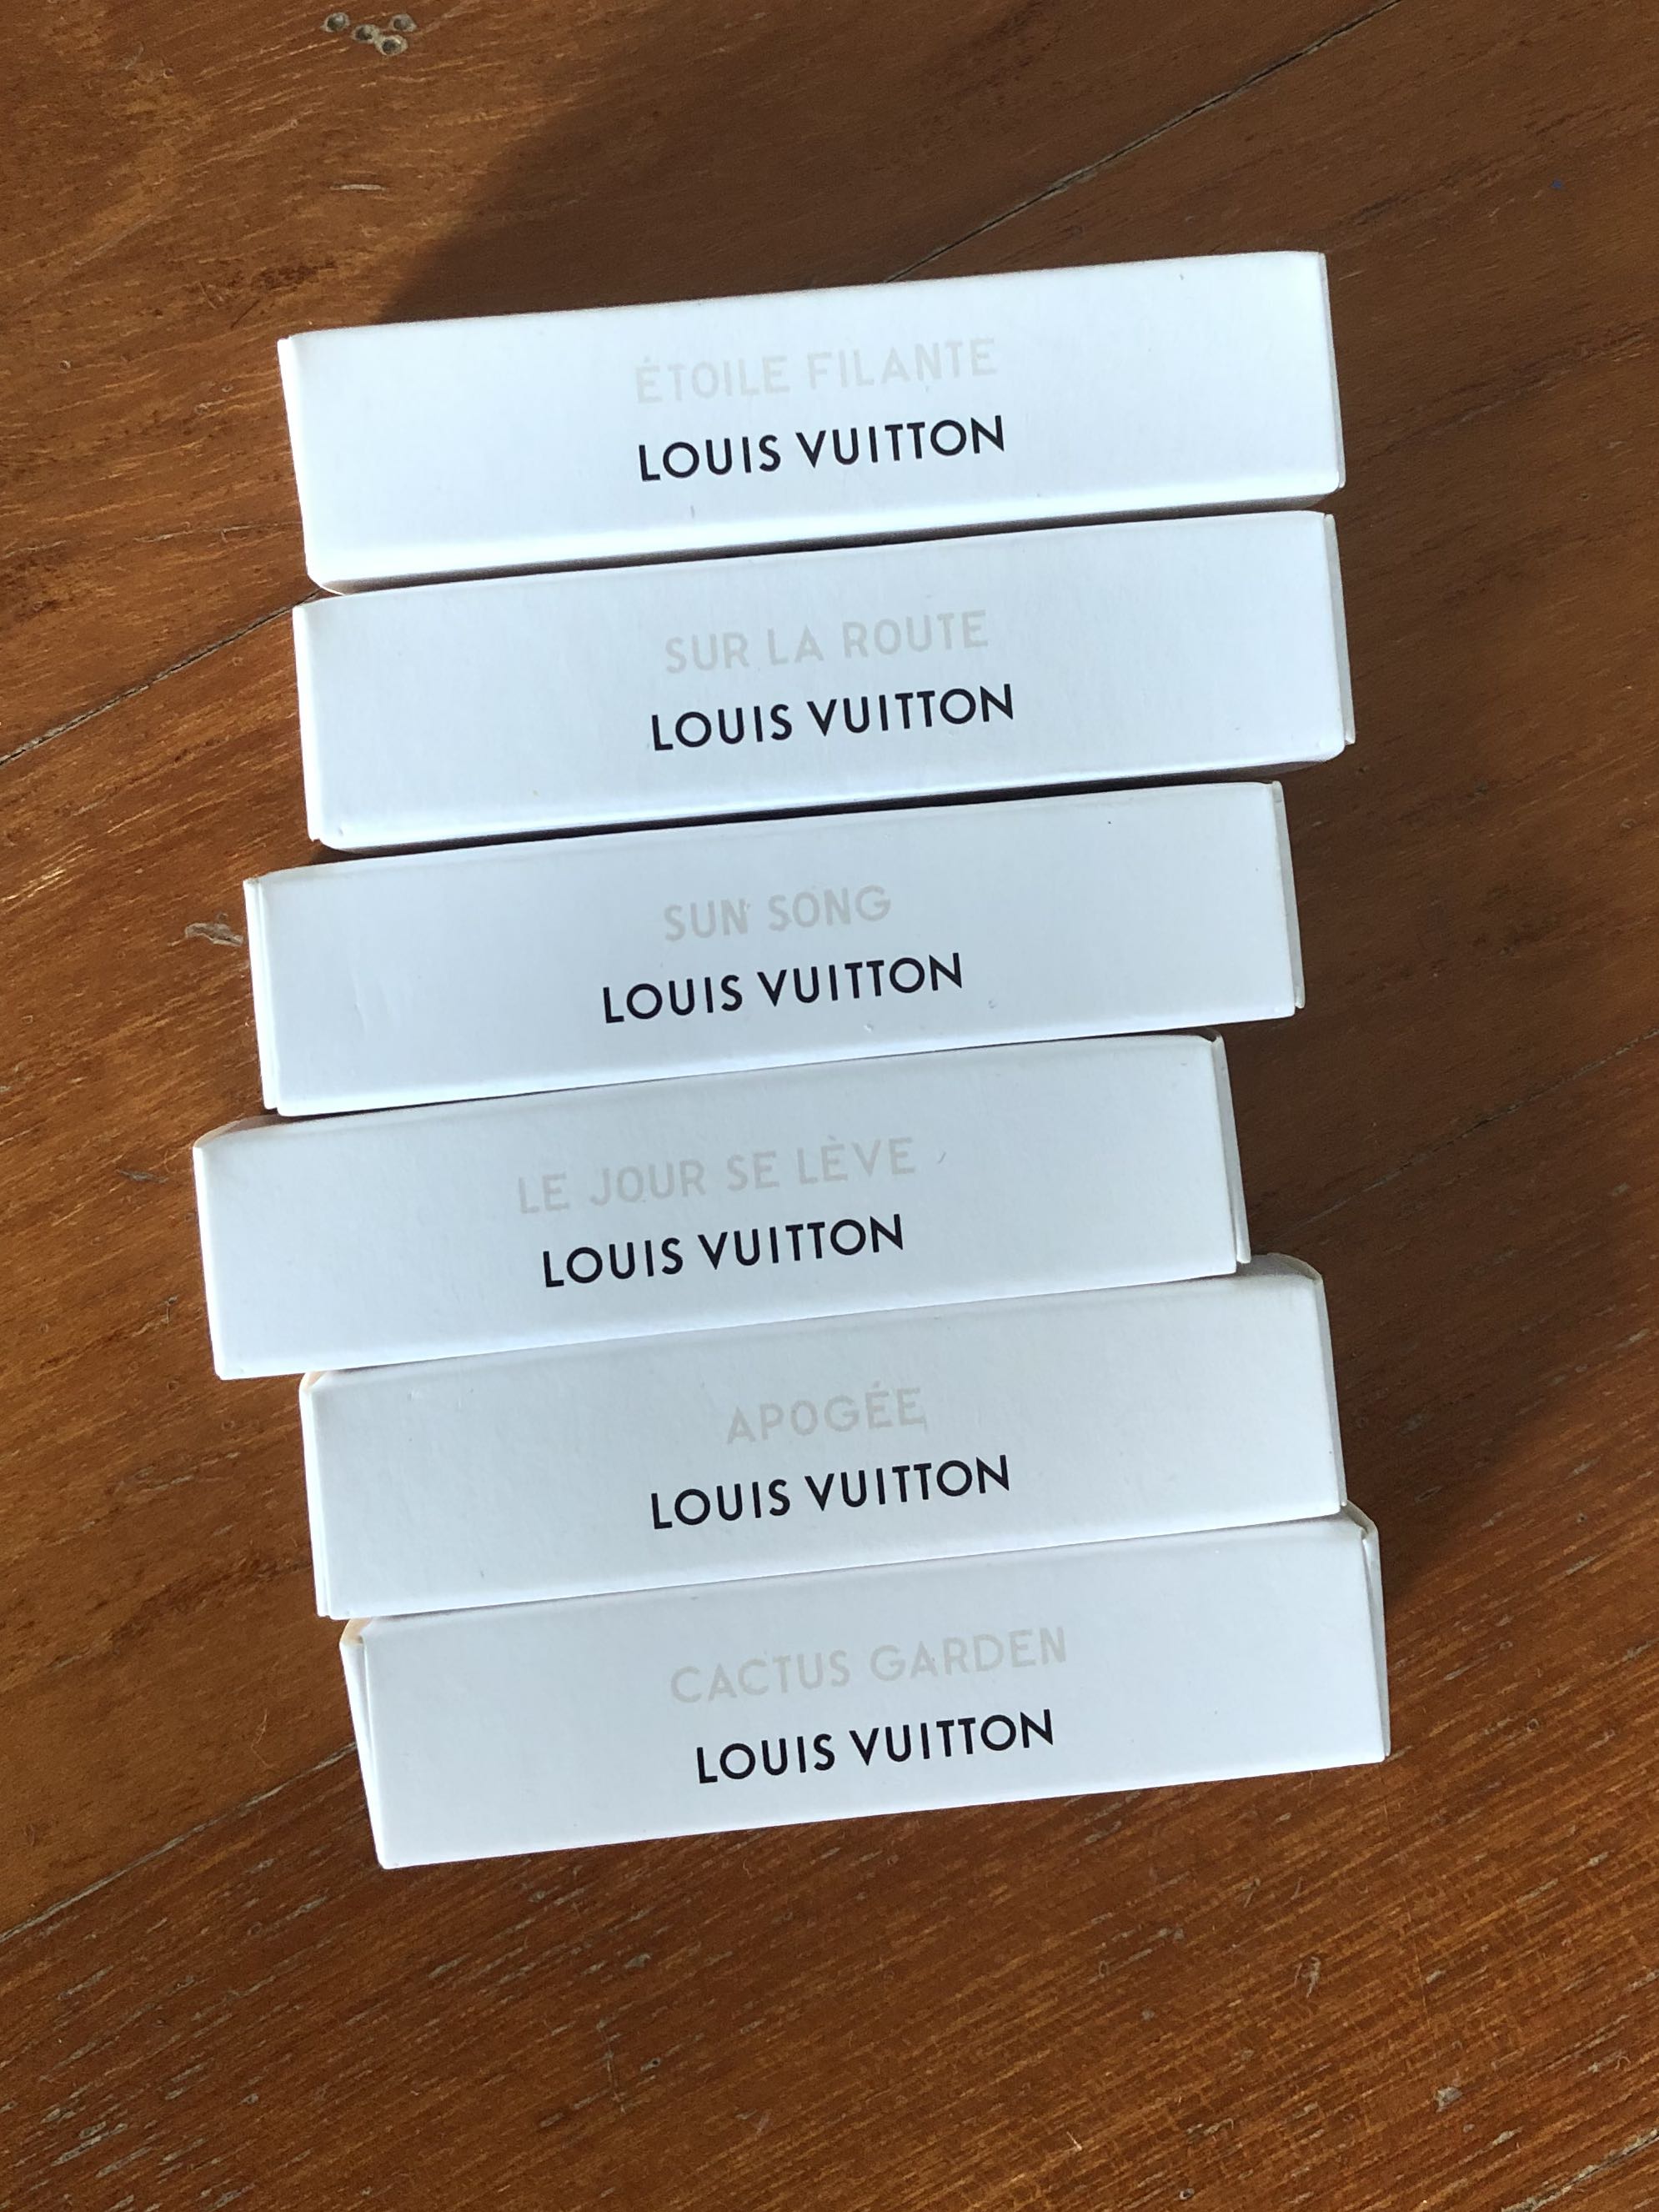 MINI) LOUIS VUITTON LV SUN SONG EDP 10ML, Beauty & Personal Care, Fragrance  & Deodorants on Carousell